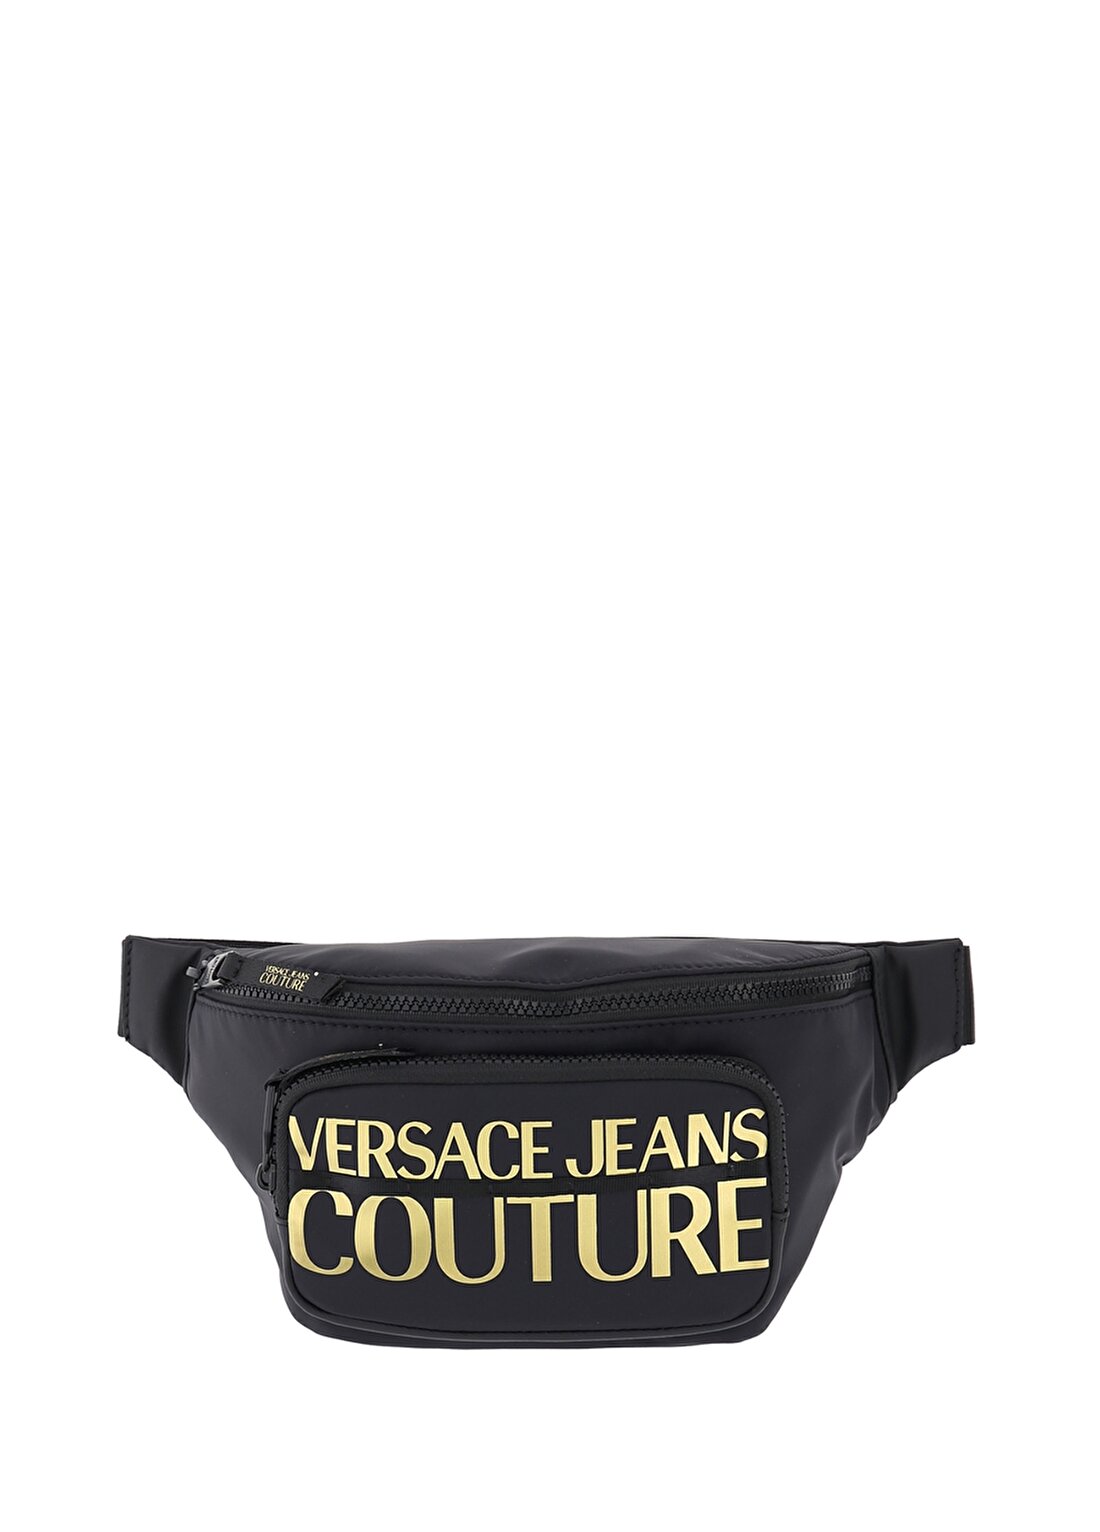 Versace Jeans Couture Siyah Erkek Bel Çantası 73YA4B97 BLACK/GOLD BEL ÇANTASI